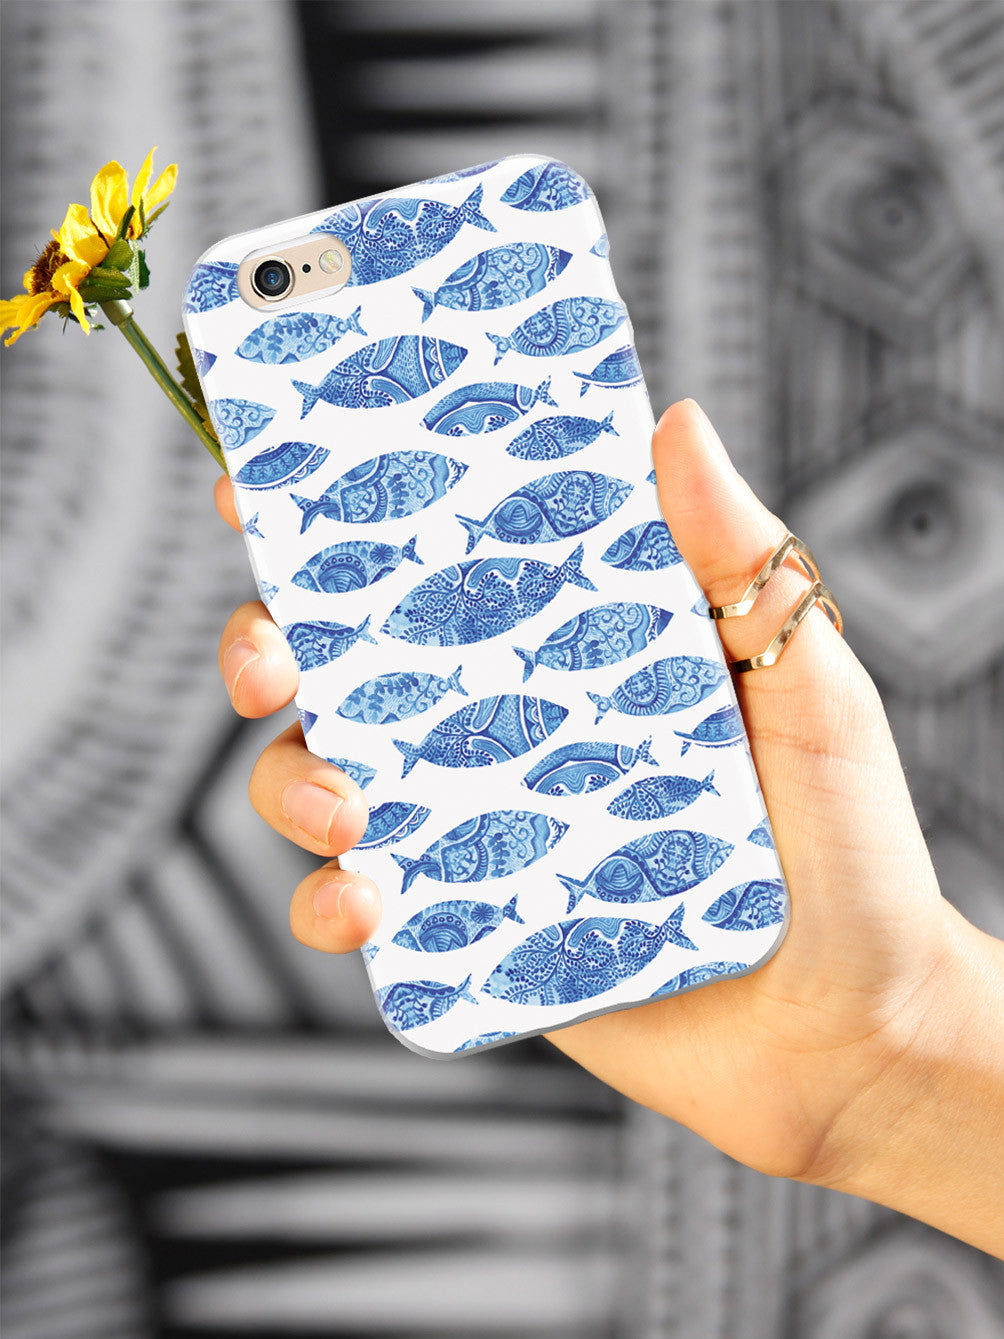 Ocean Blue Fish Fabric Pattern - White Case